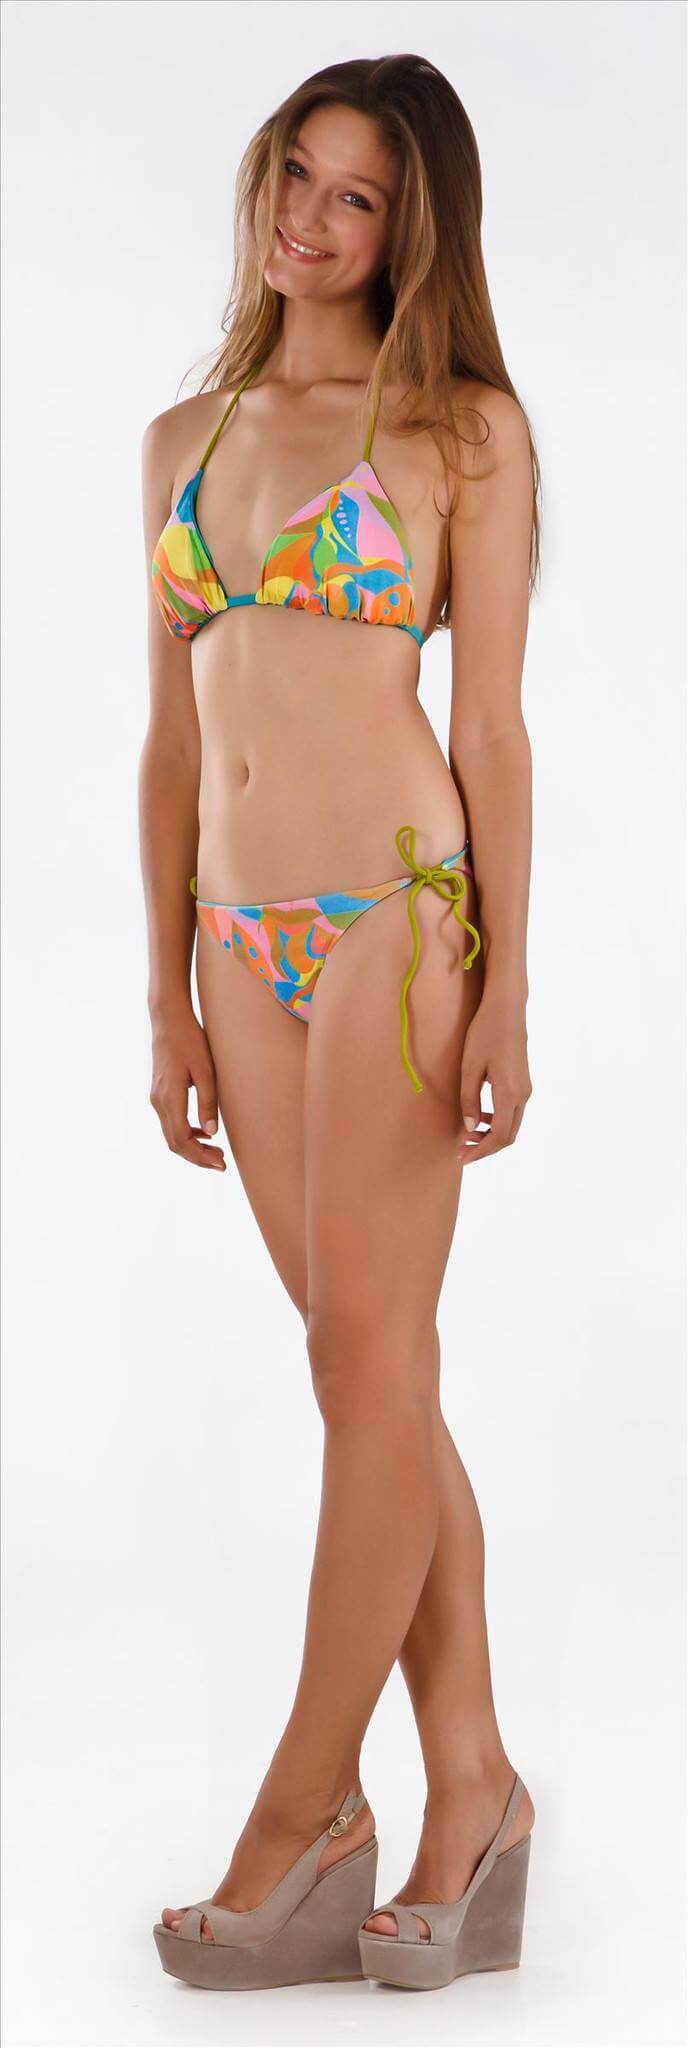 Thaikila Apparel & Accessories > Clothing > Swimwear Print / One Size Thaikila Kawai Reversible Triangle Top and Side Tie Brazilian Bottom Bikini Swimwear Set